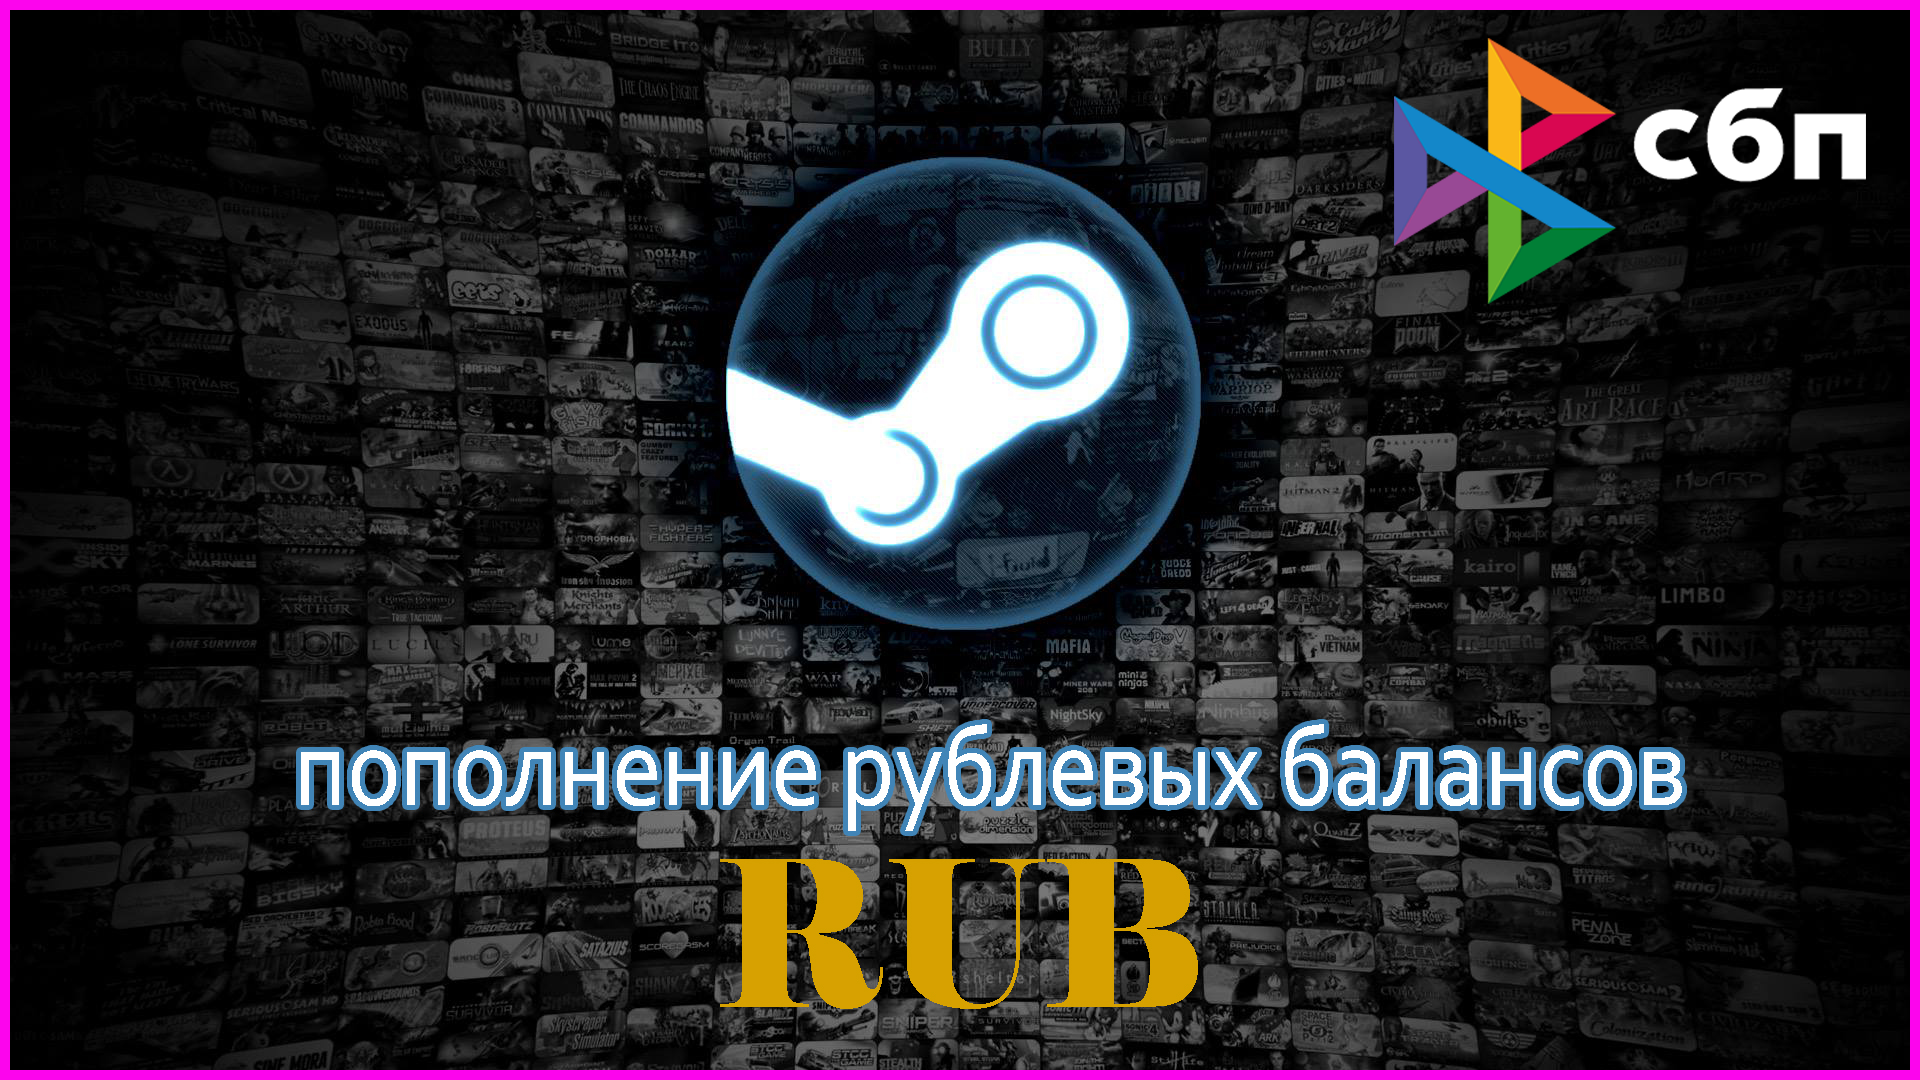 ⭐ Steam RUB top-up Steam rubles wallet ONLINE ⭐